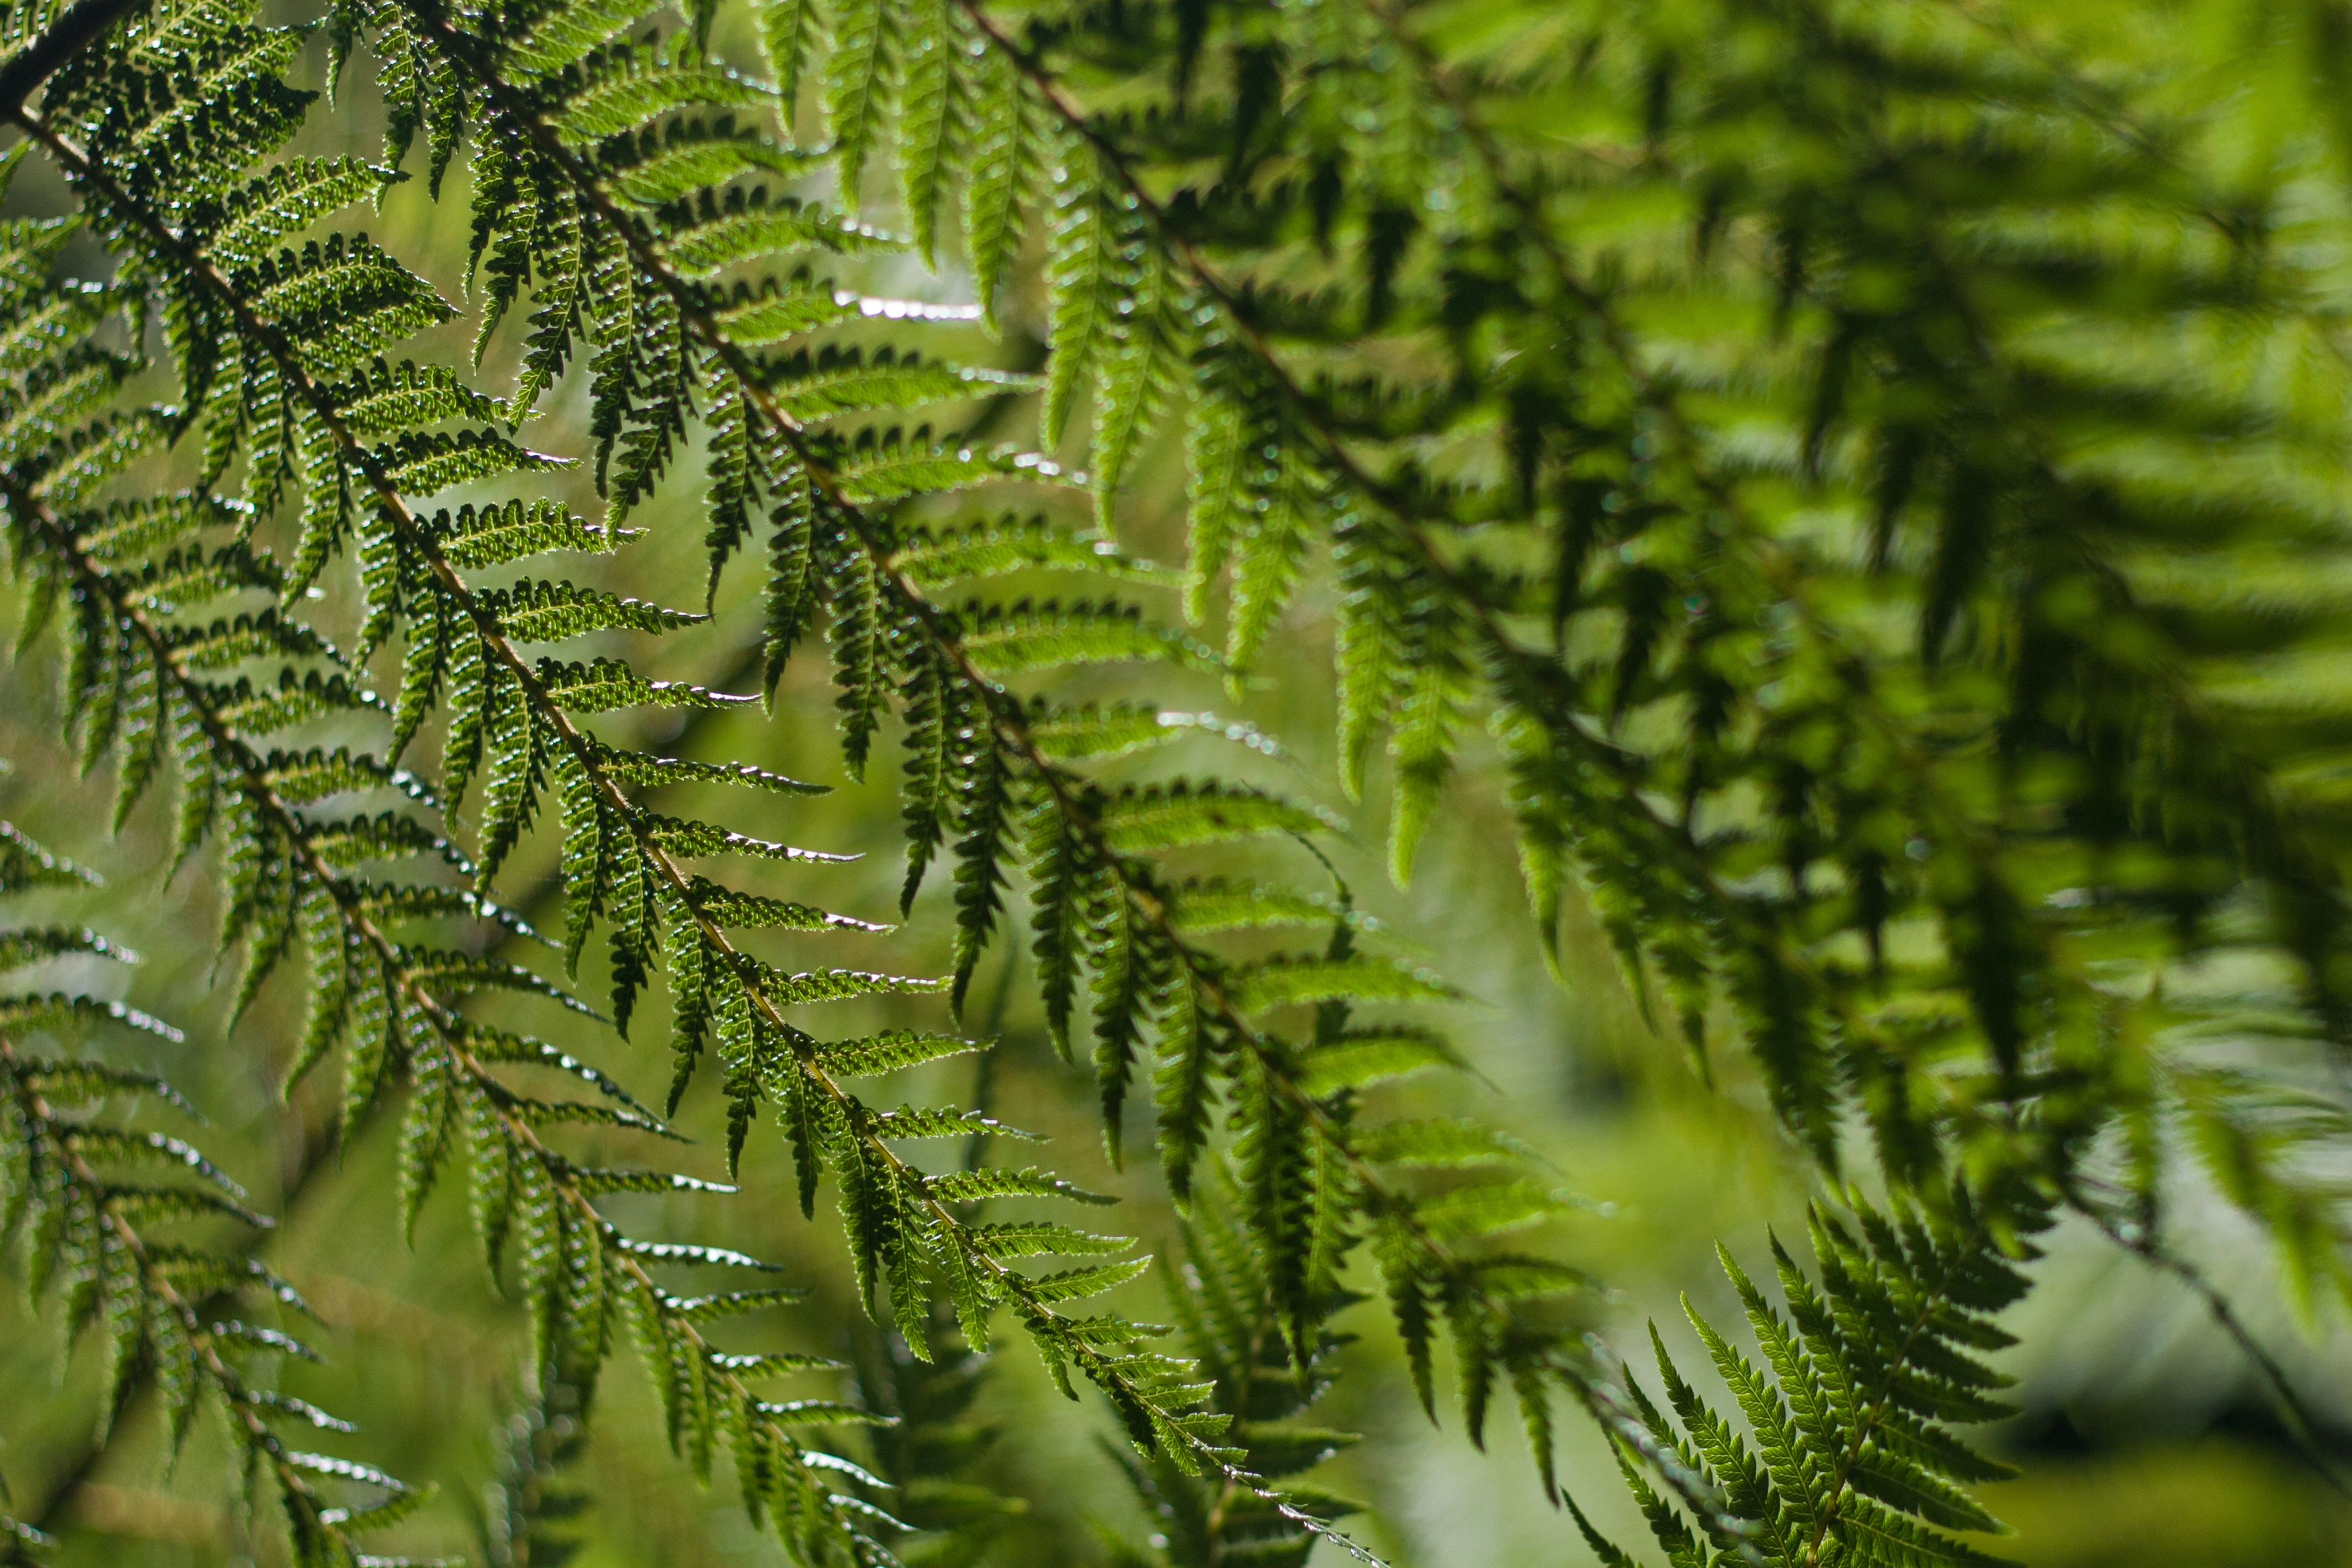 native view - green ferns